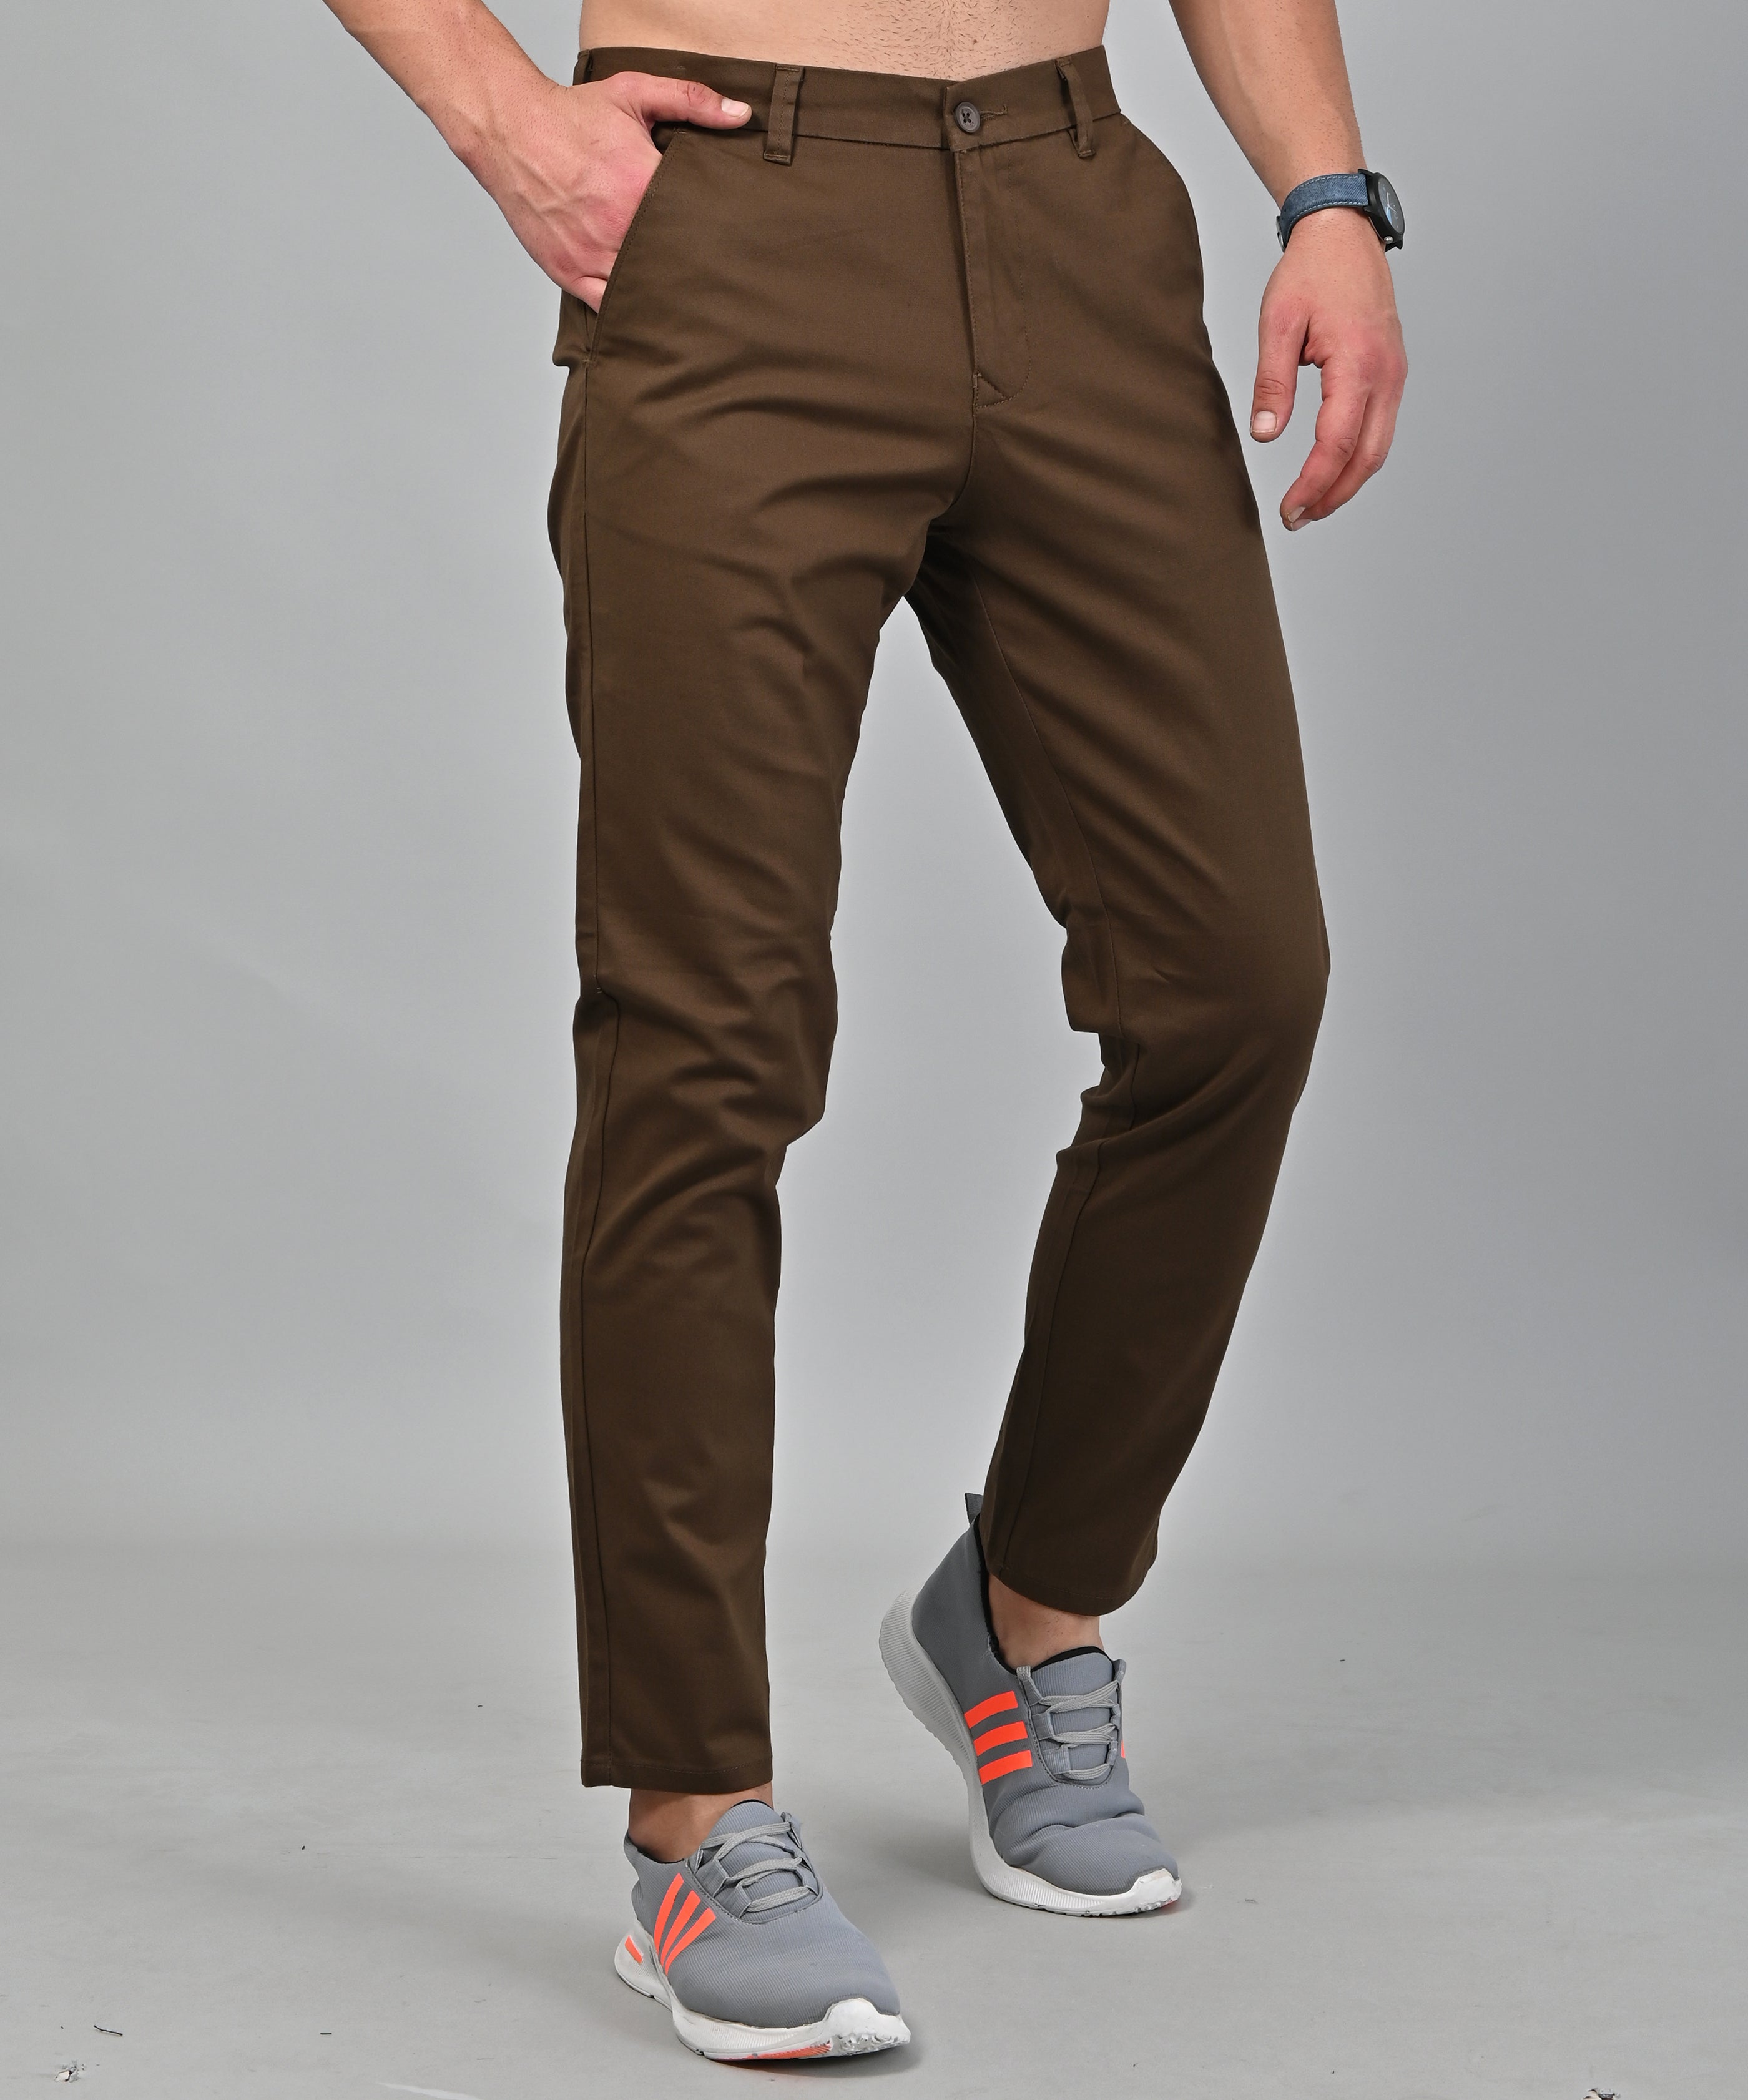 Old Navy 100% Cotton Khaki Pants Mens 32x30 Tan Classic Twill Straight Leg  | eBay